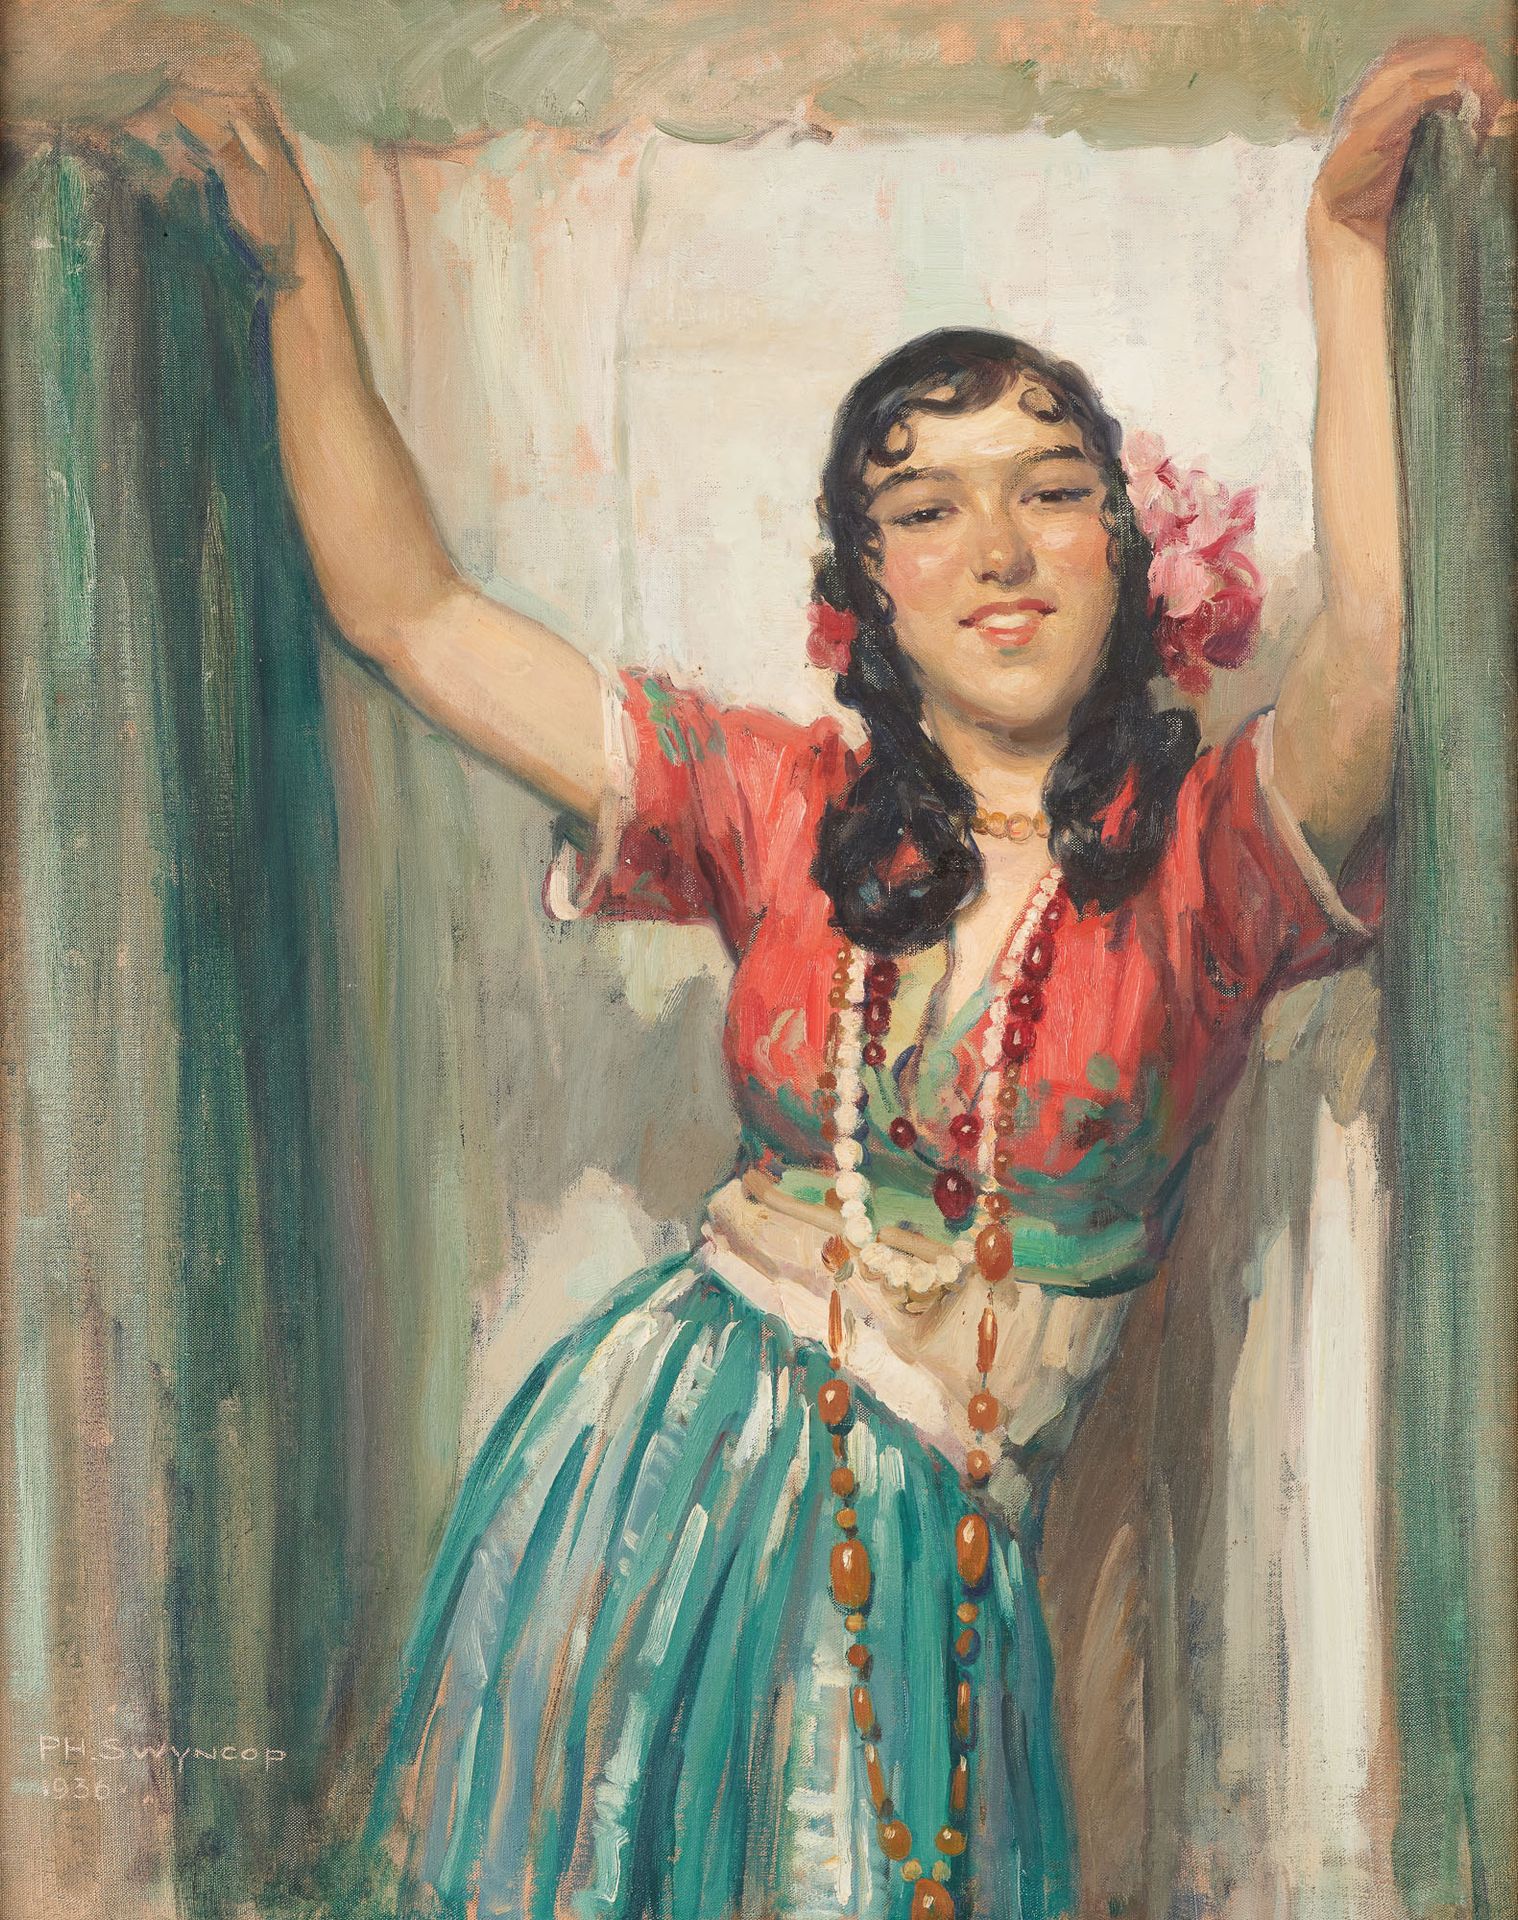 PHILIPPE SWYNCOP Ecole belge (1878-1949) 布面油画：戴着鲜花头饰的年轻女子。

签名和日期：Ph. Swyncop 19&hellip;